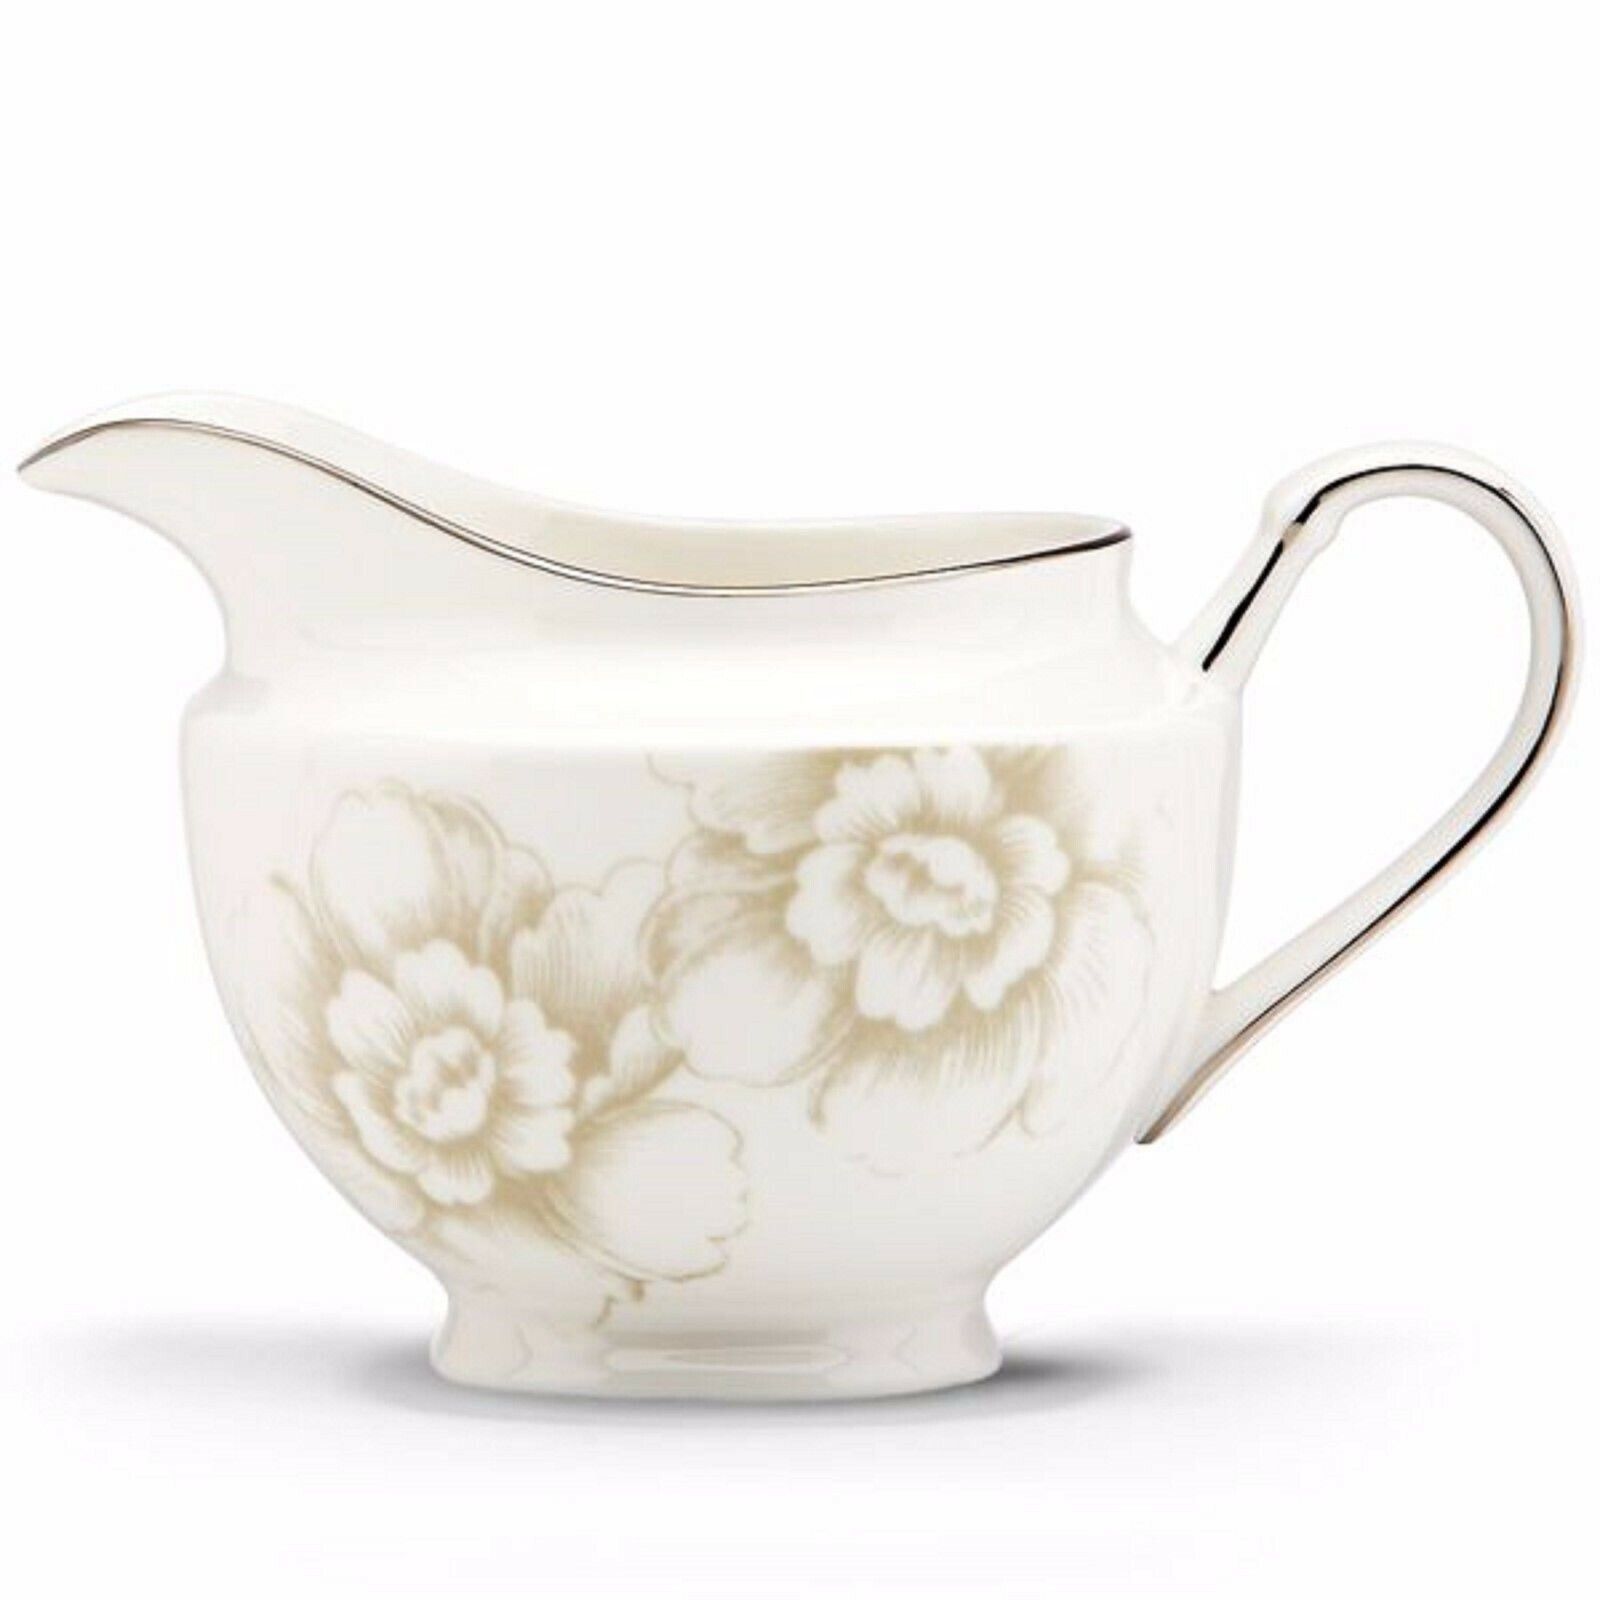 Lenox Blush Silhouette Creamer White Floral Design Platinum Accents Gift NEW - $30.69